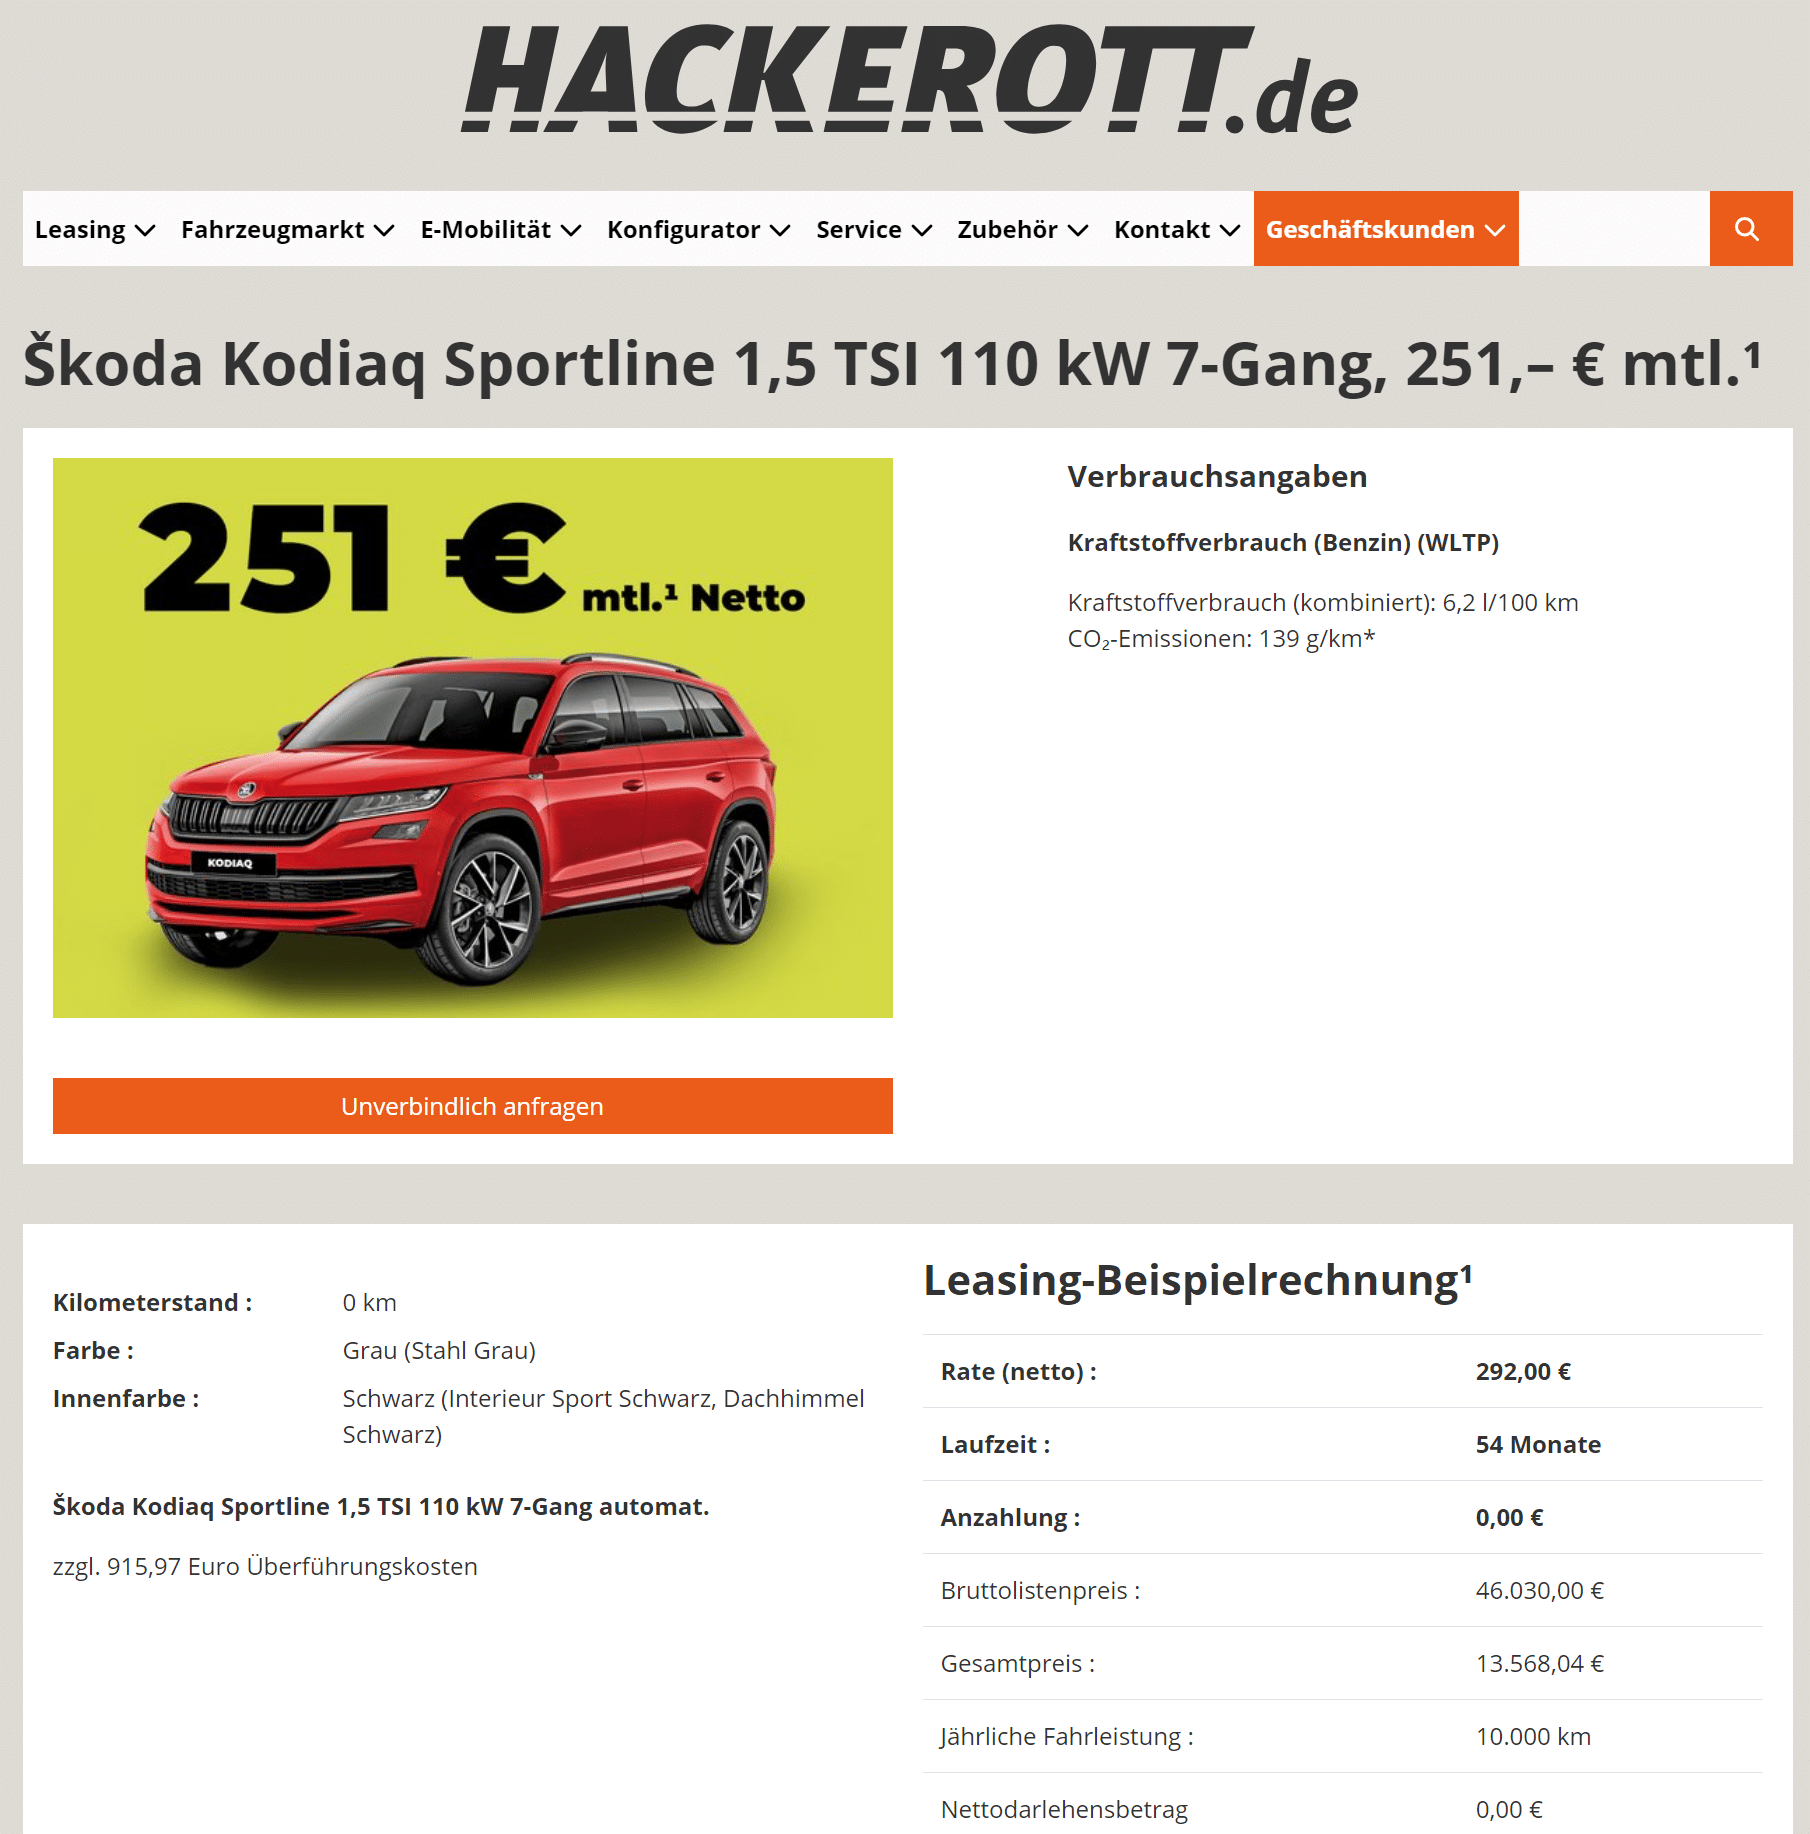 Škoda Kodiaq Leasing für 292 Euro im Monat netto 